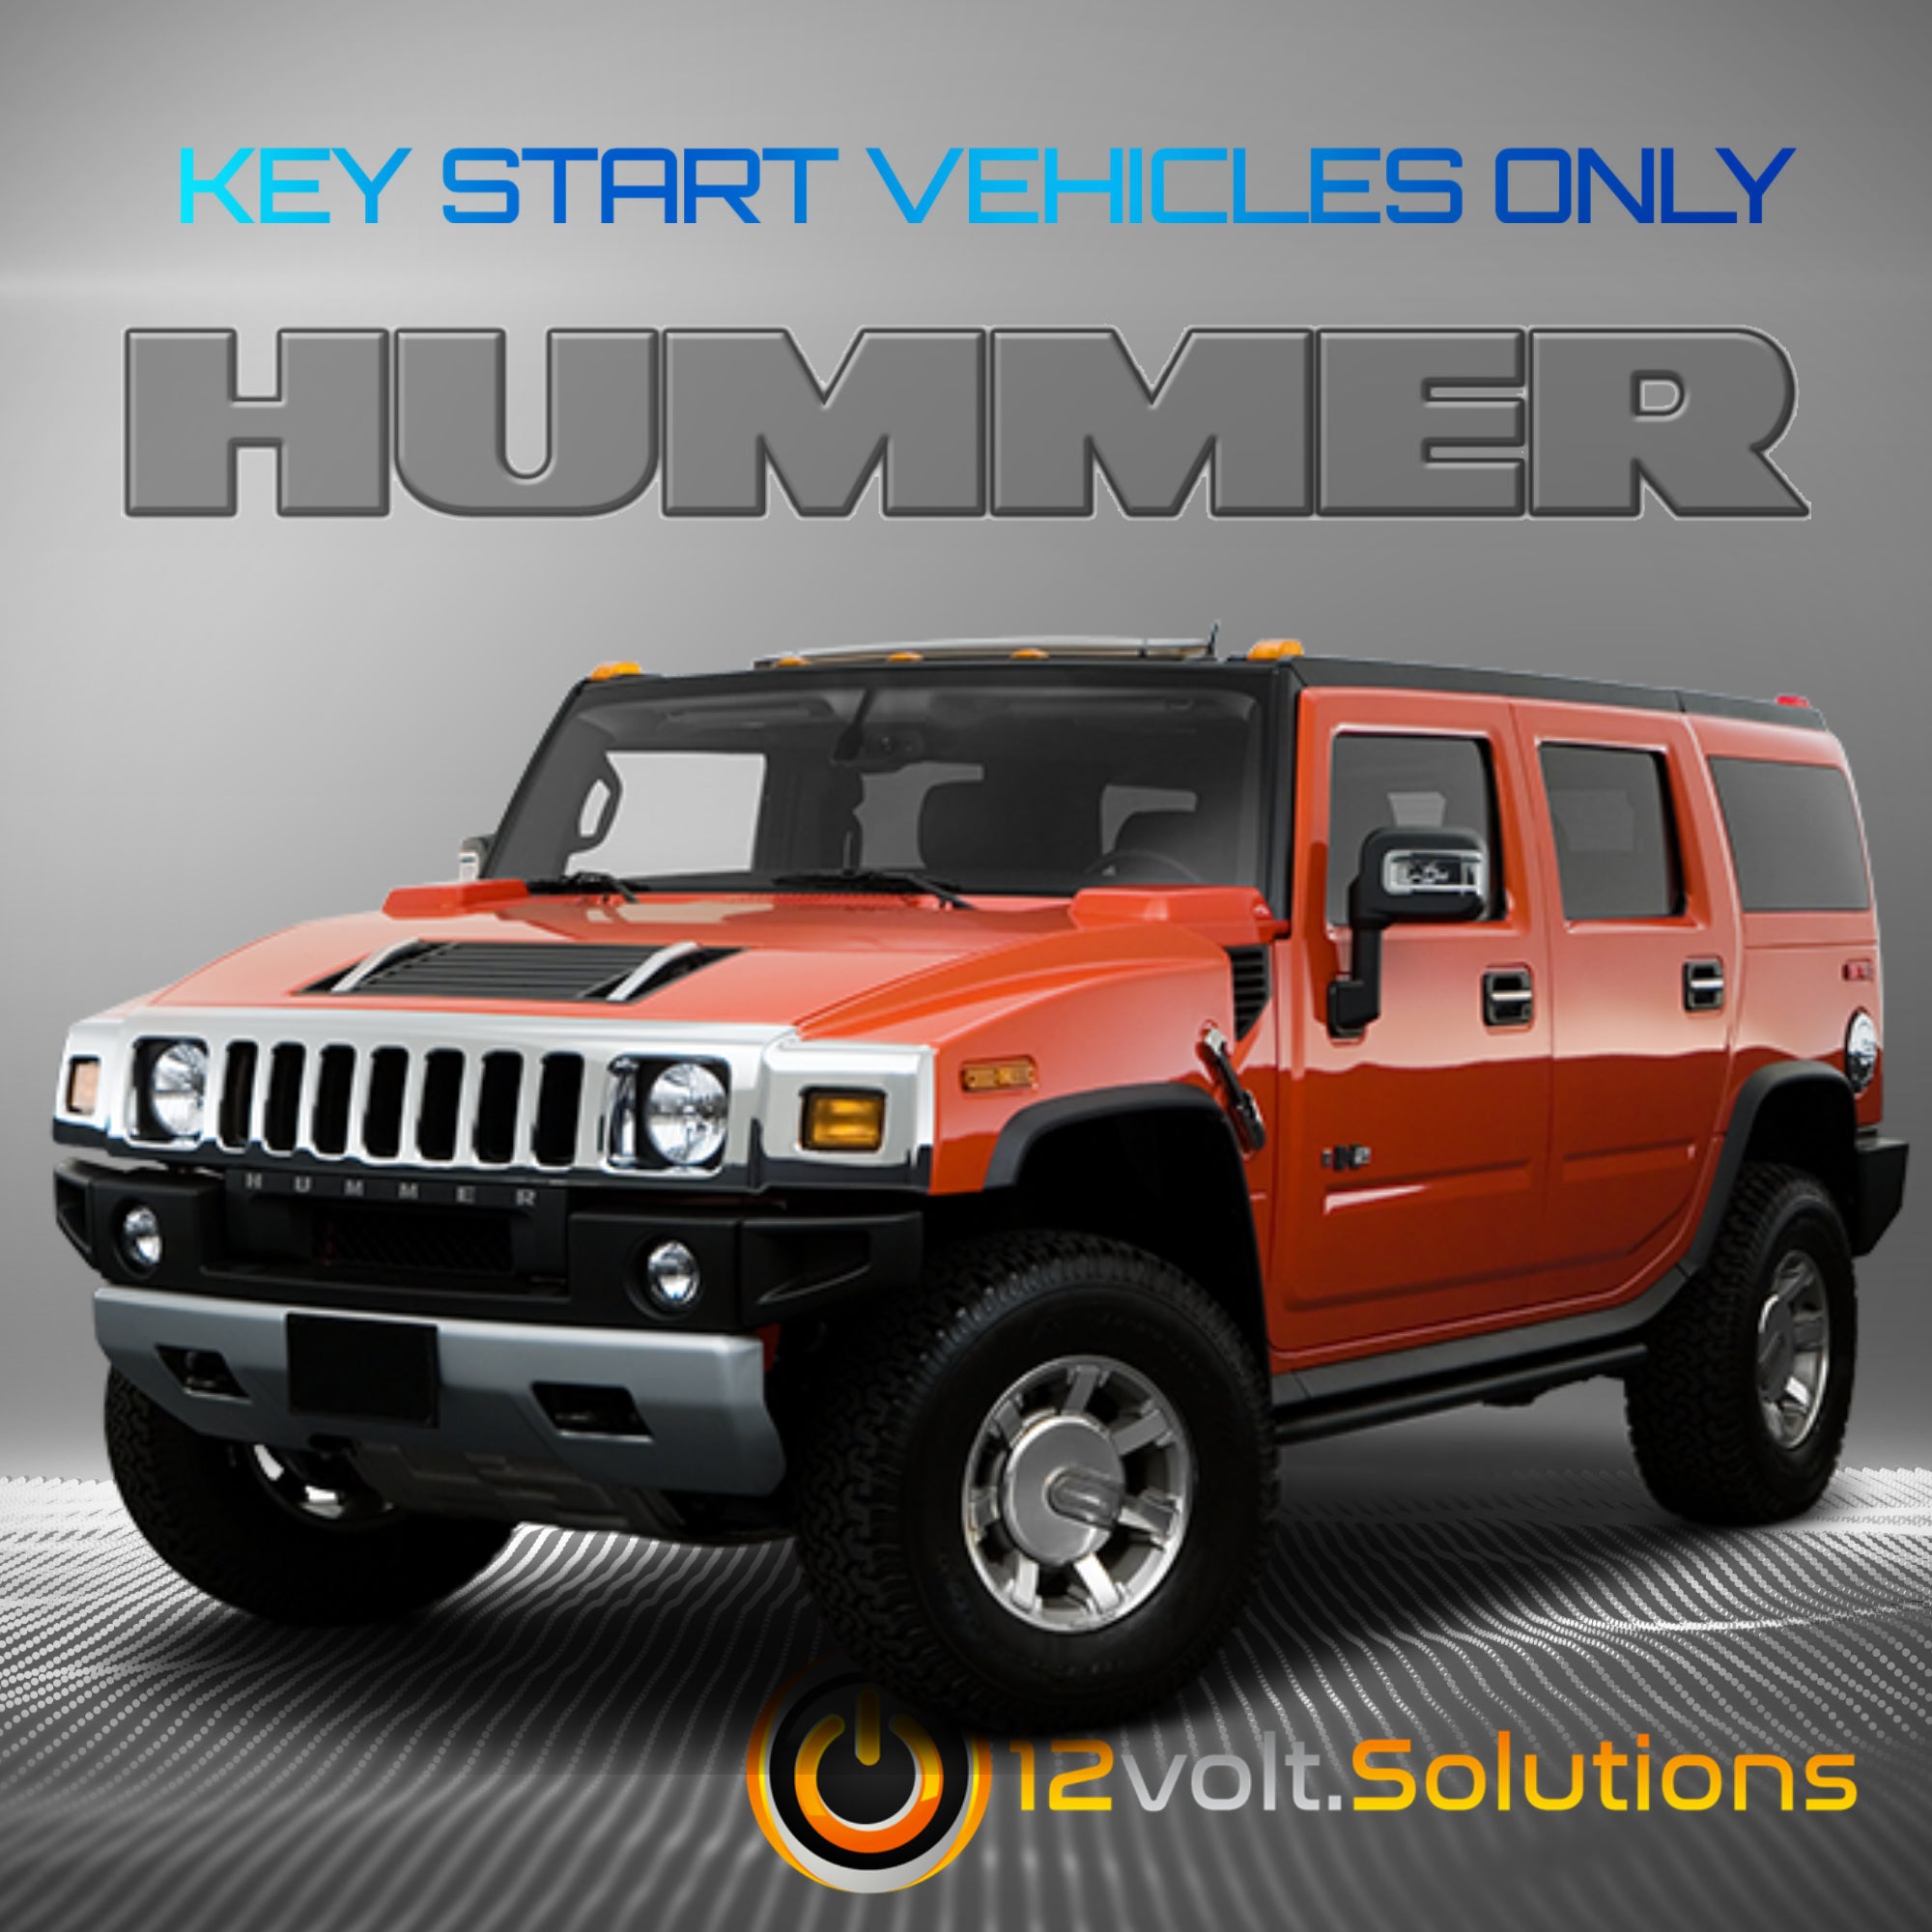 2008-2009 Hummer H2 Plug & Play Remote Start Kit (Key Start)-12Volt.Solutions